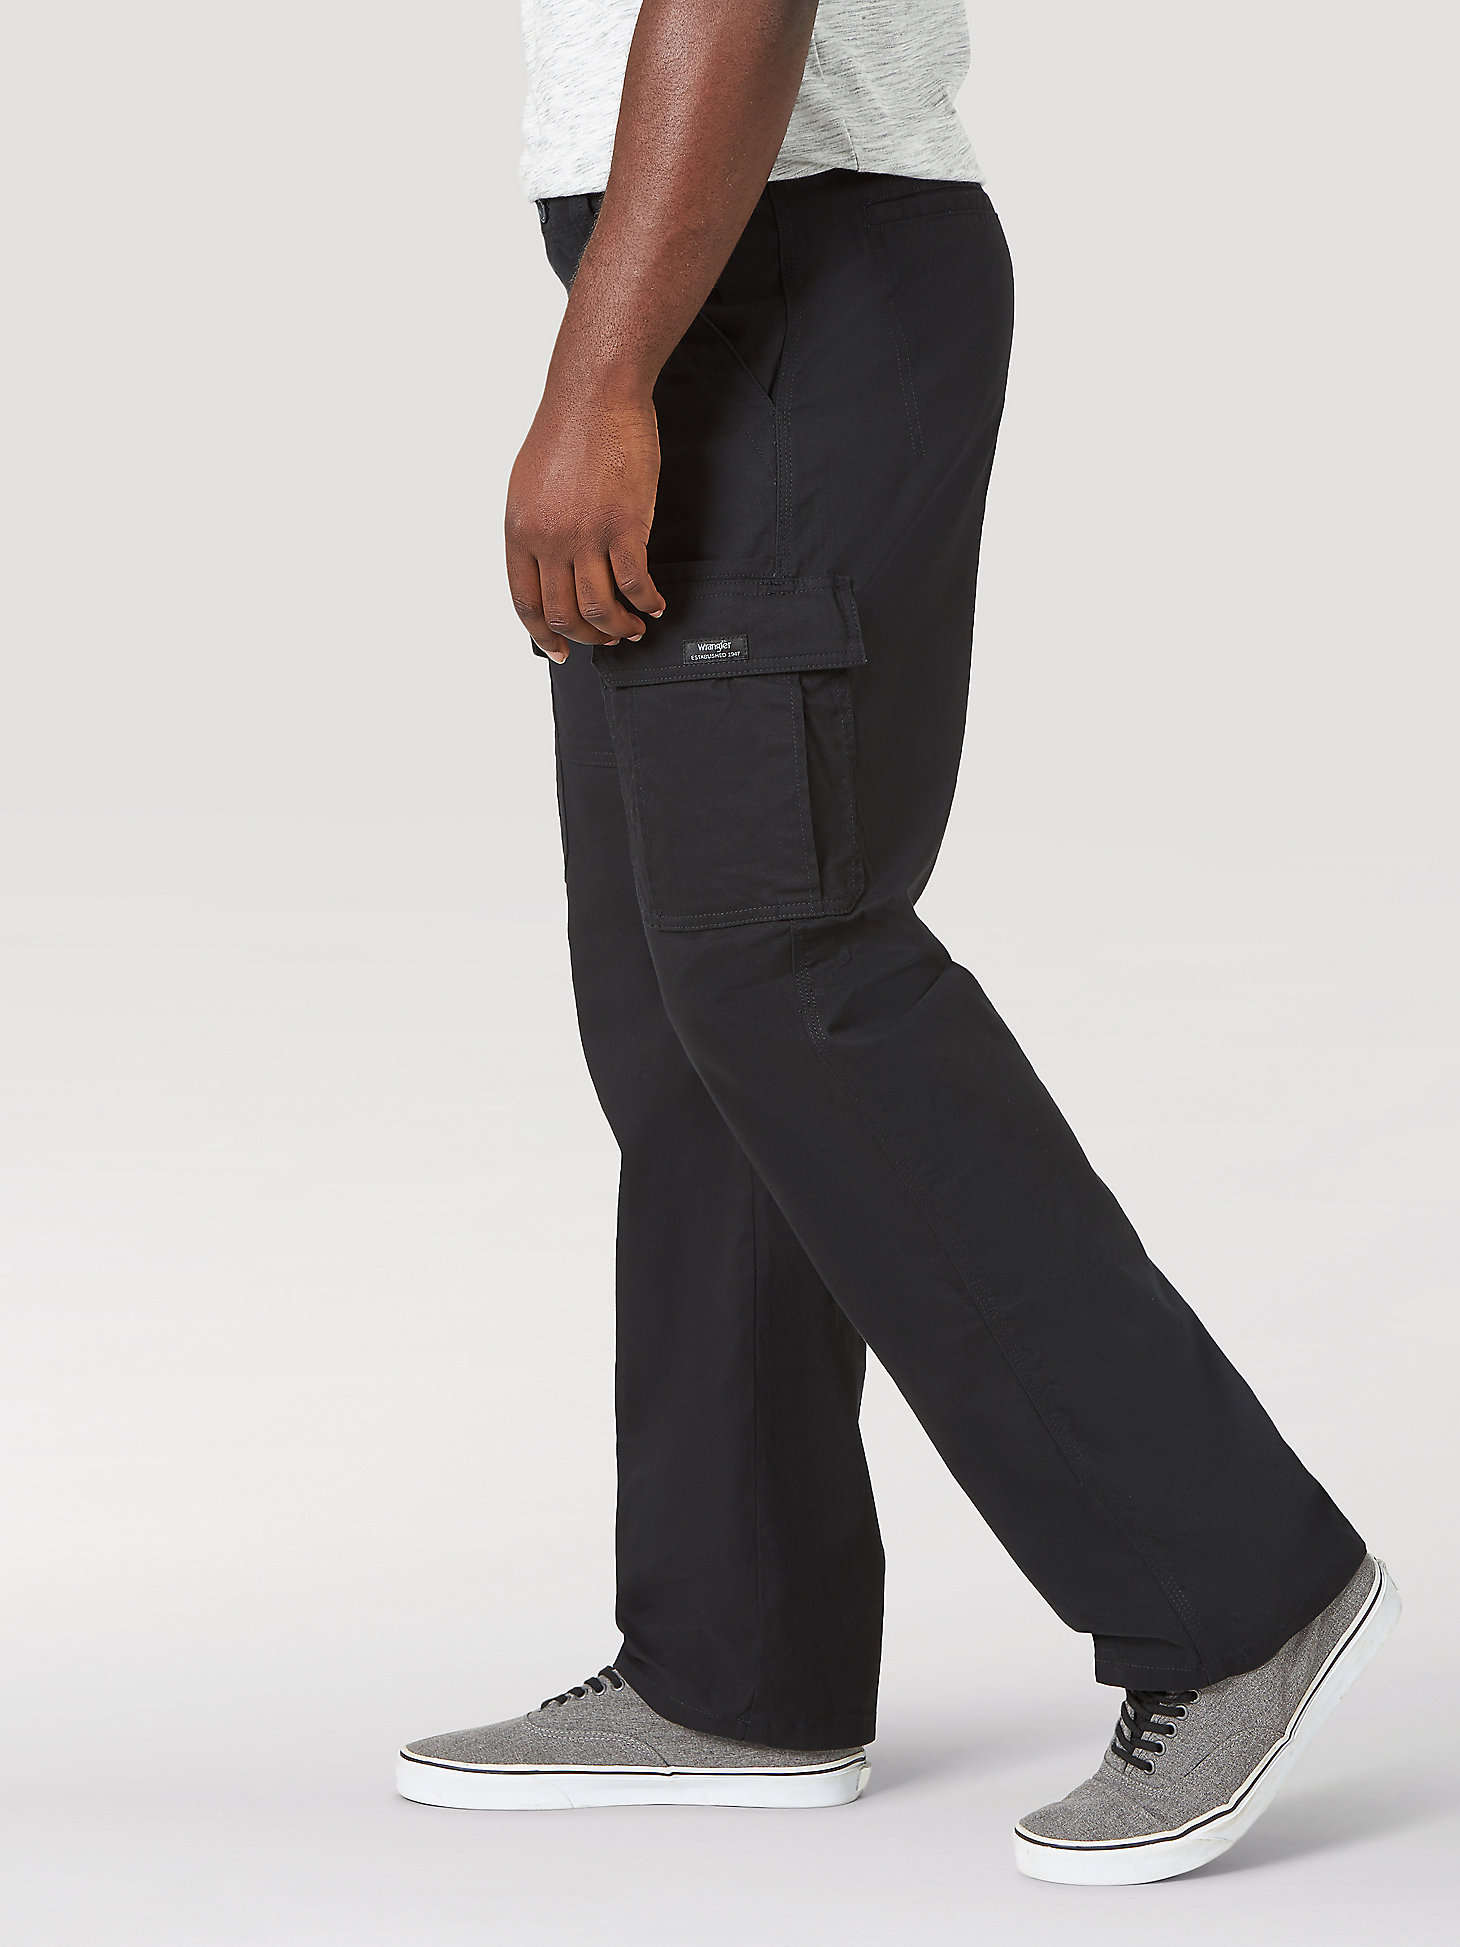 Wrangler® Men's Five Star Premium Relaxed Fit Flex Cargo Pant in Black alternative view 1